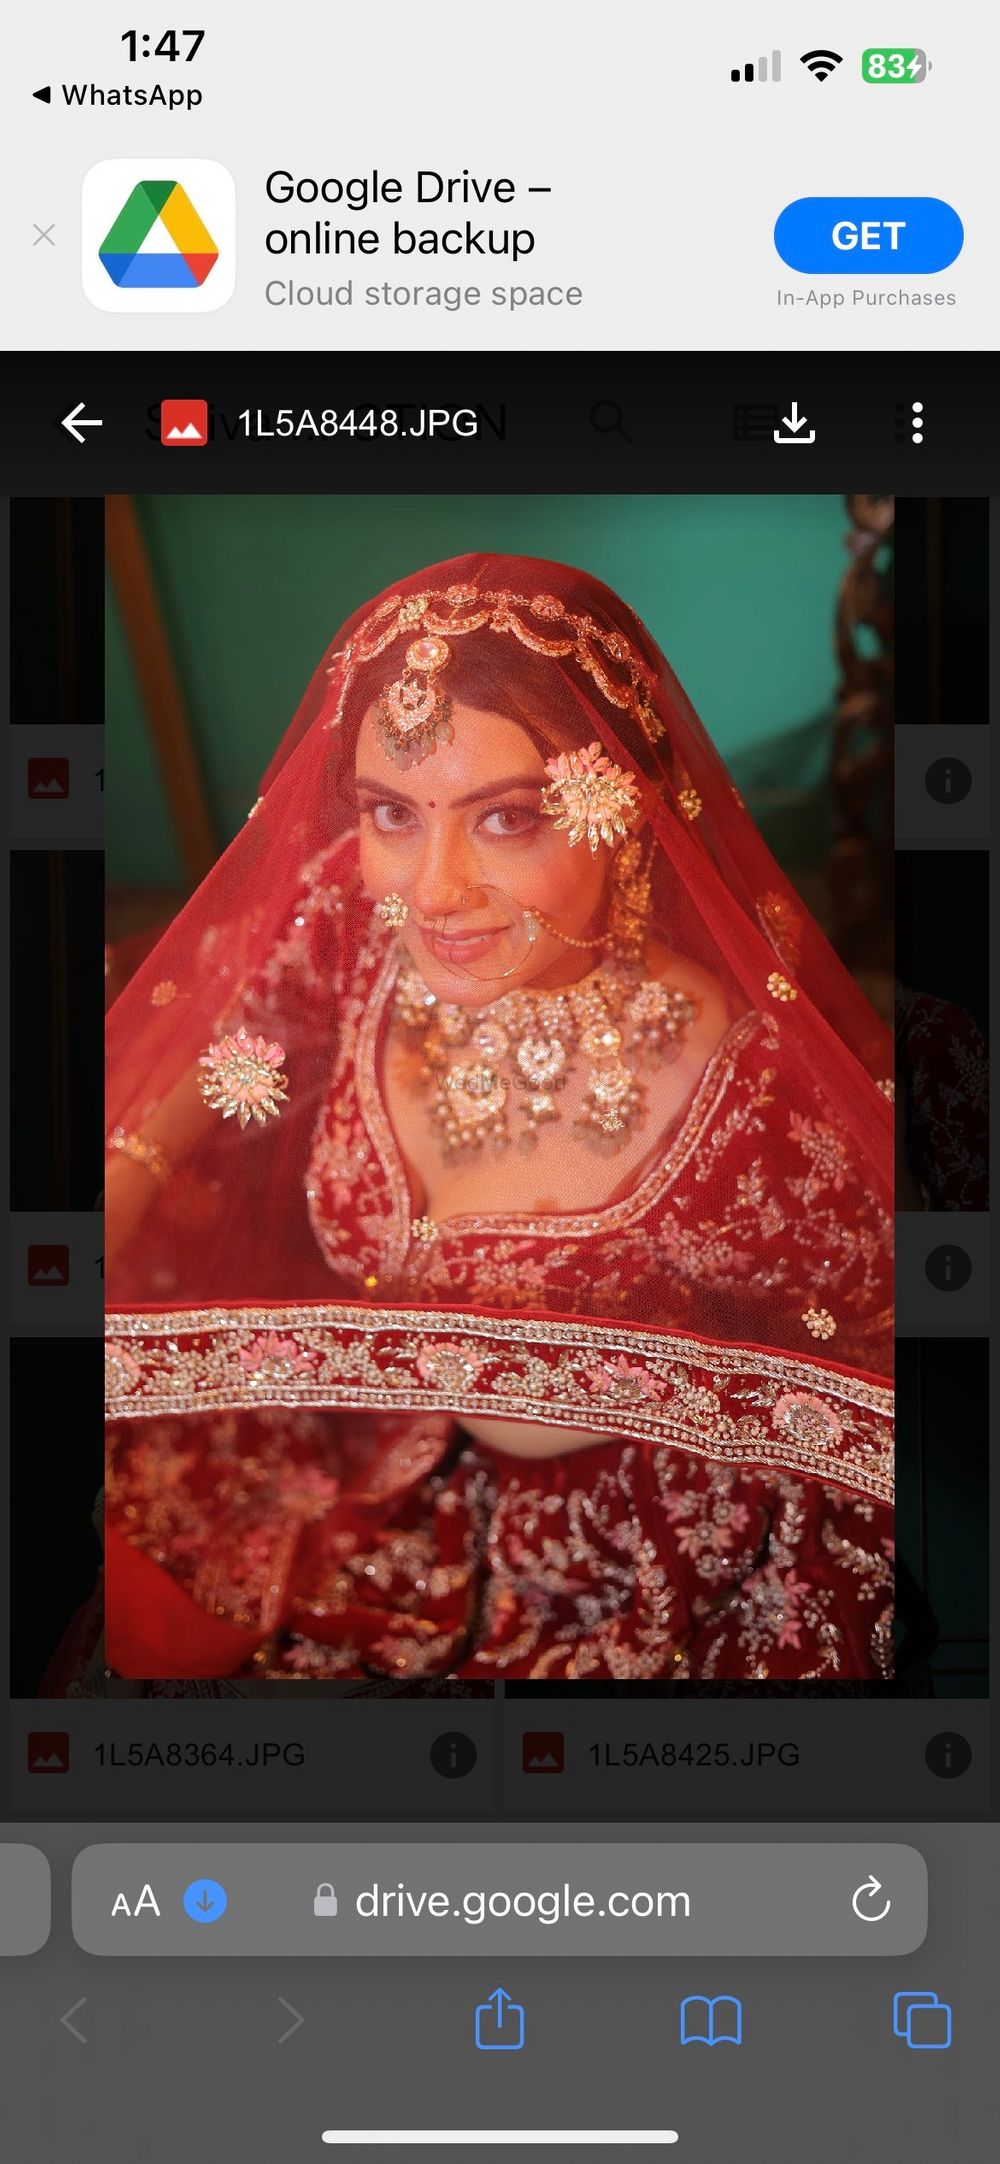 Photo From Brides - By Shivani Jain Makeup Artistry